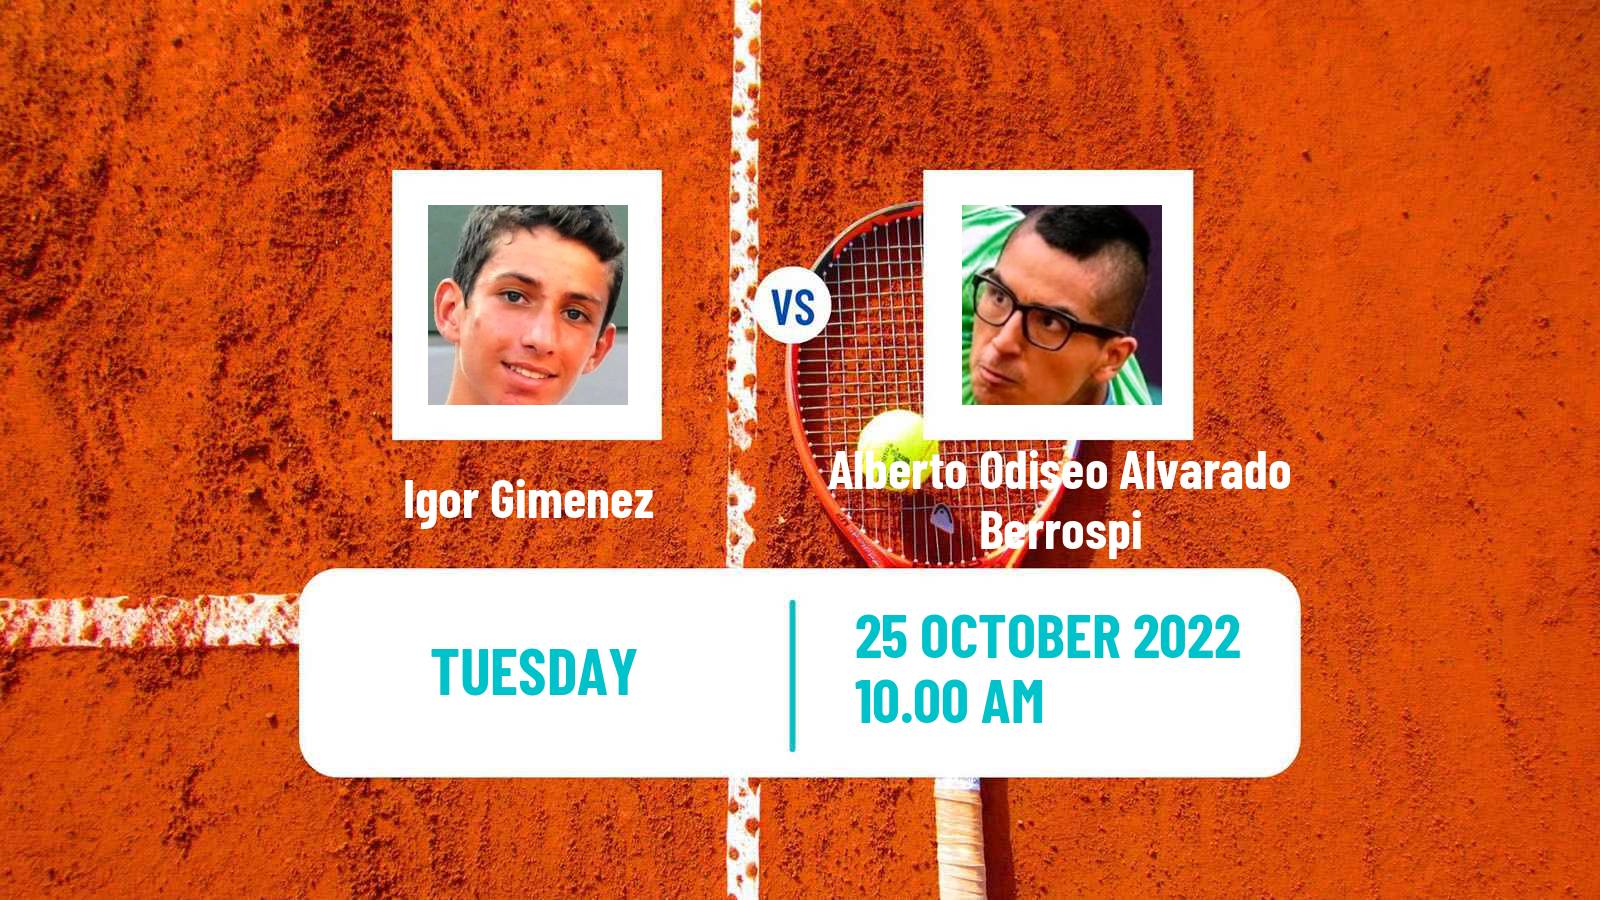 Tennis ITF Tournaments Igor Gimenez - Alberto Odiseo Alvarado Berrospi